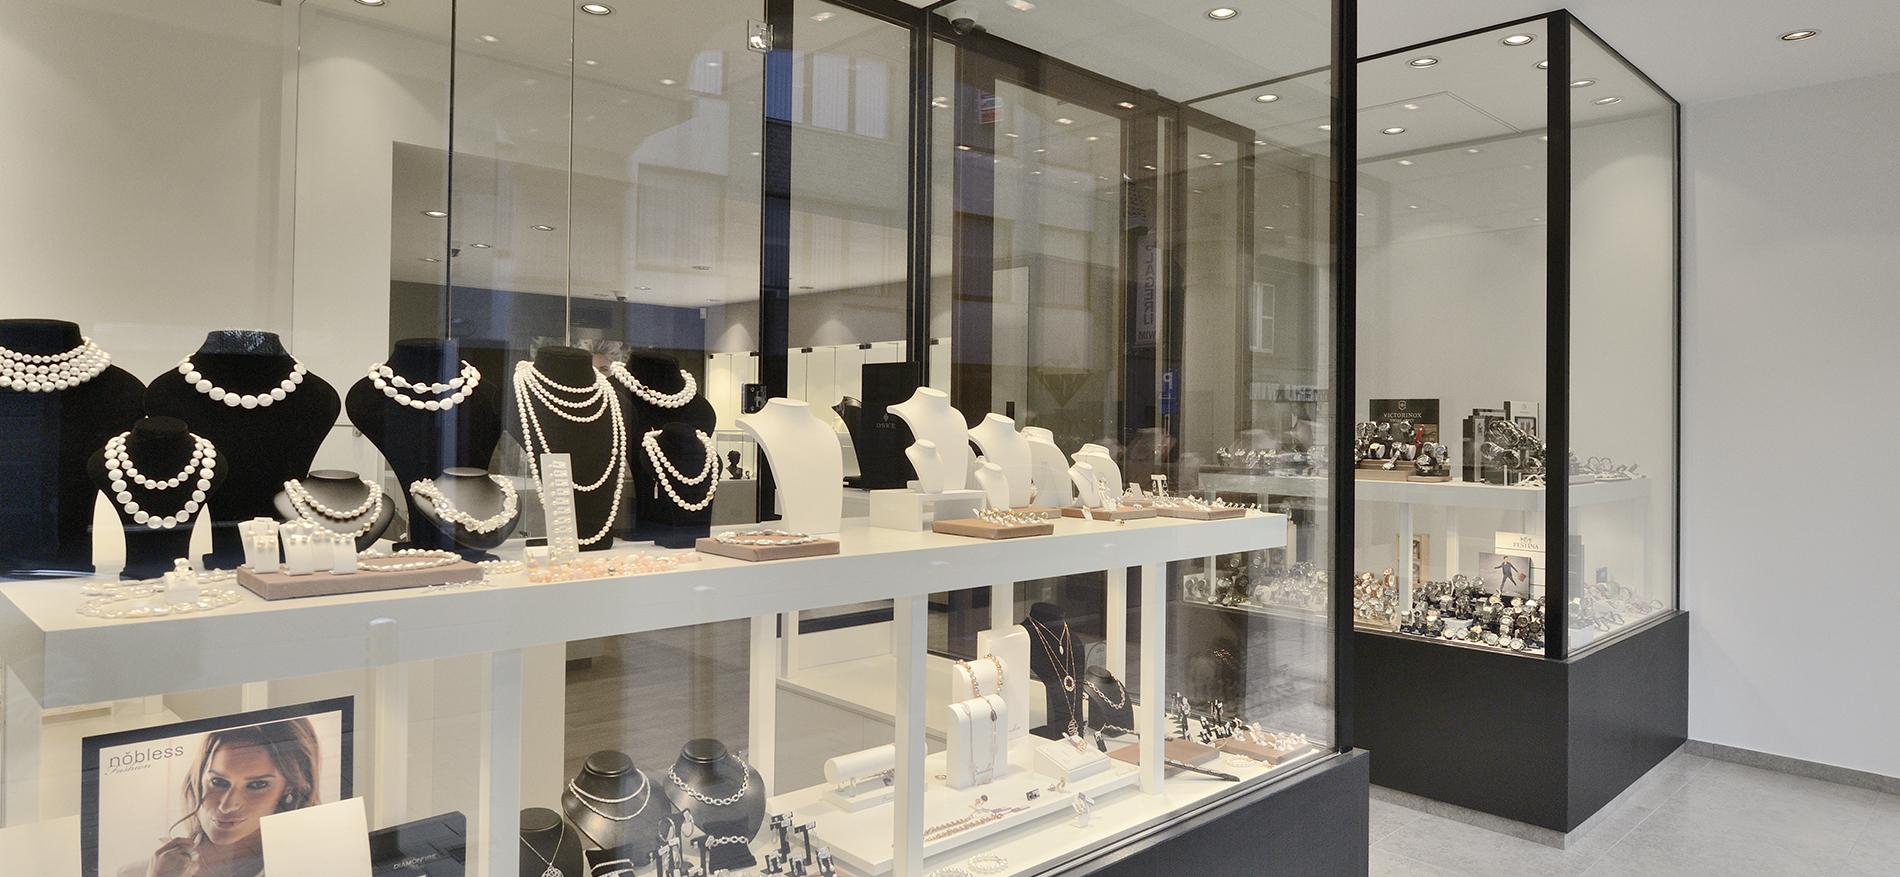 Juwelen Evy d’Or in Ingelmunster (BE) – Shopdesign winkelconcept - 